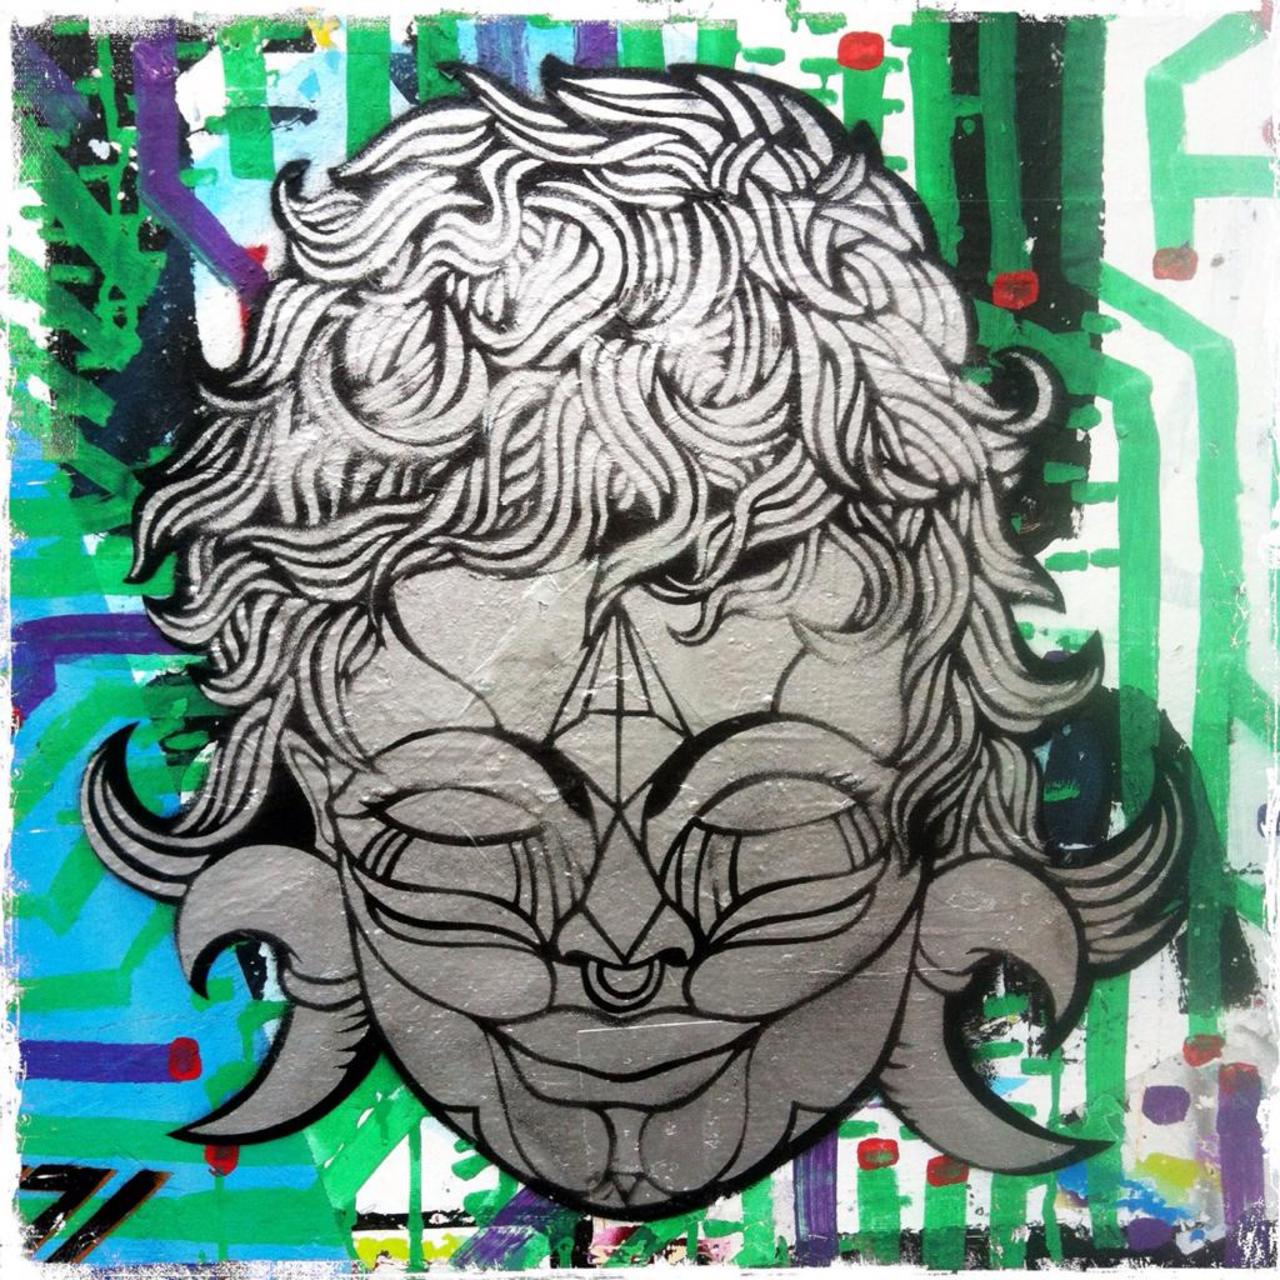 RT @BrickLaneArt: Work on Star Yard,Brick Lane

Artist not known #art #streetart #graffiti http://t.co/aexgWVZFVS